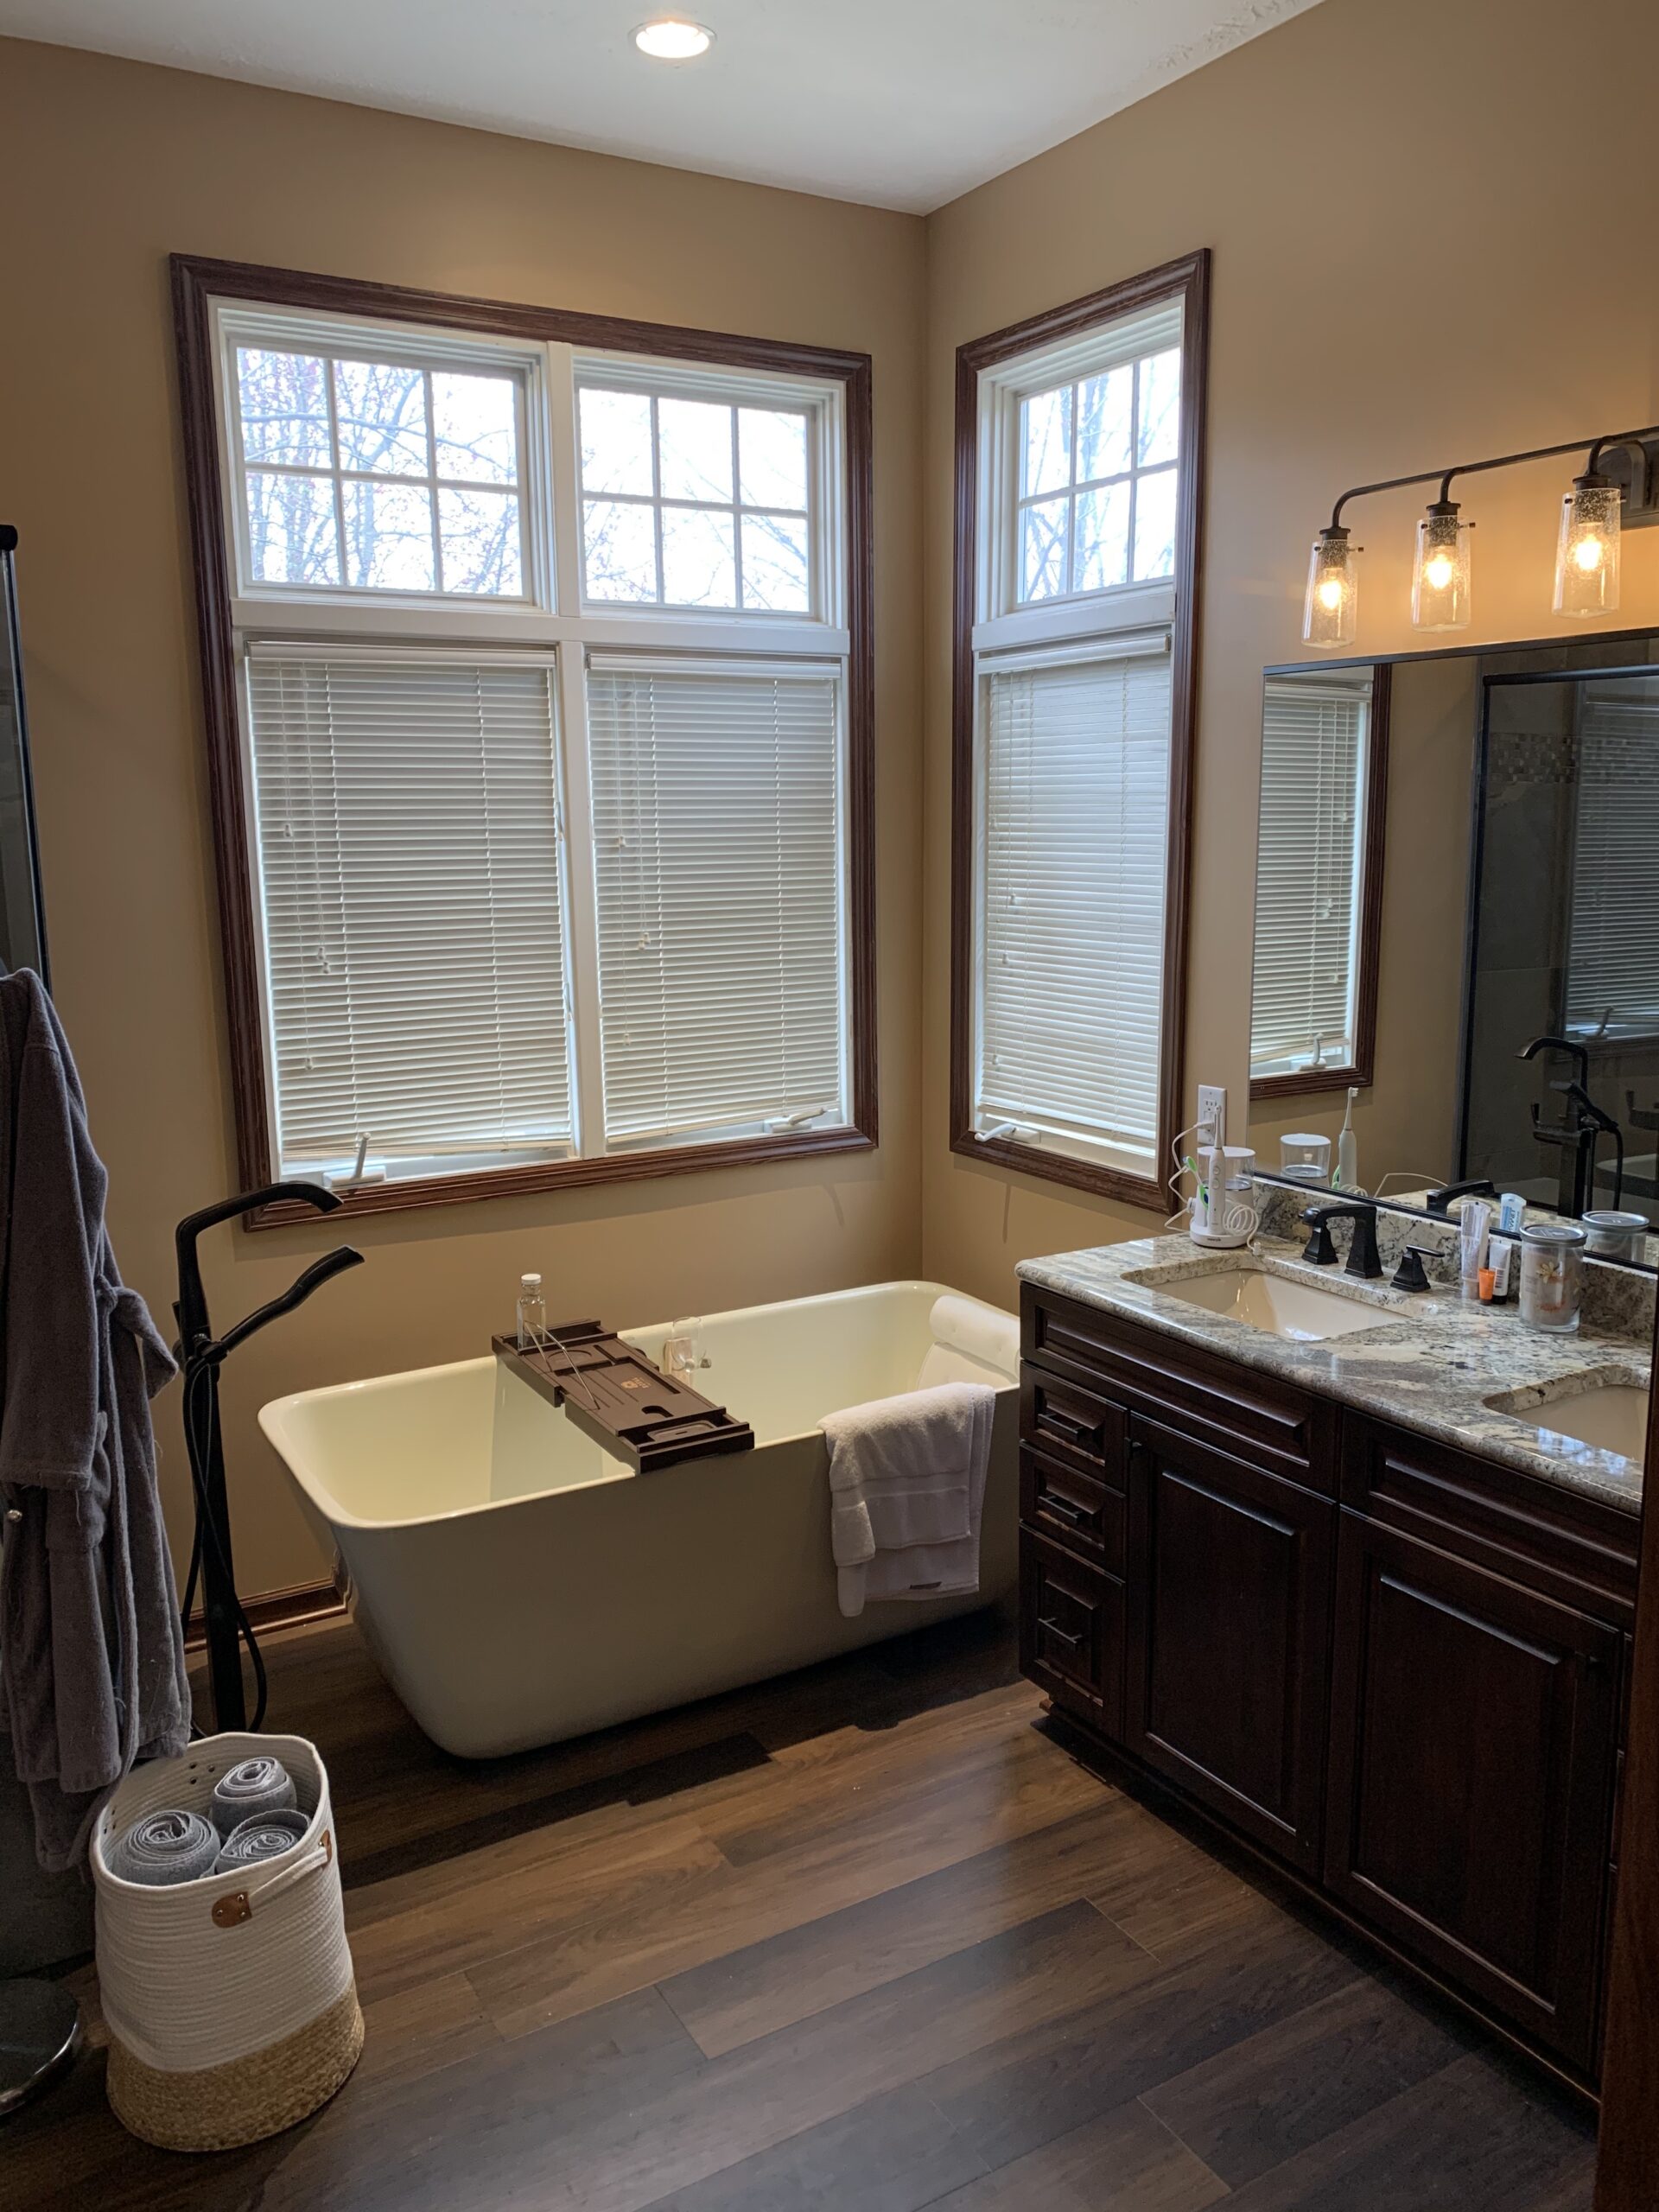 Classic bathroom, white soaking tub, double sink with dark cabinet storage, brown floor, windows